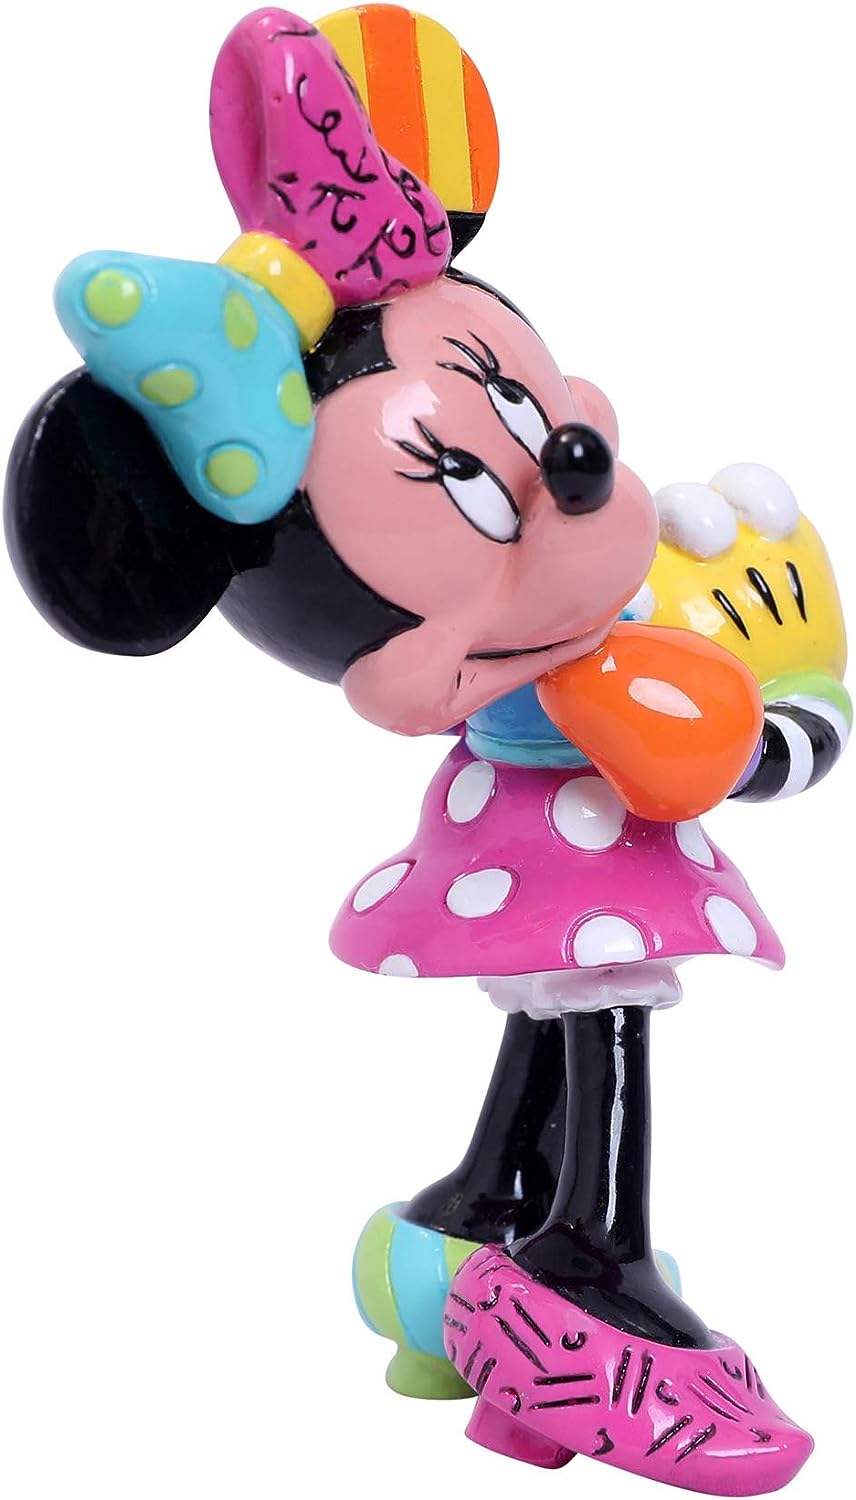 Minnie-Mouse-Blushing-Mini-Figur-berlindeluxe-maus-schleife-seite